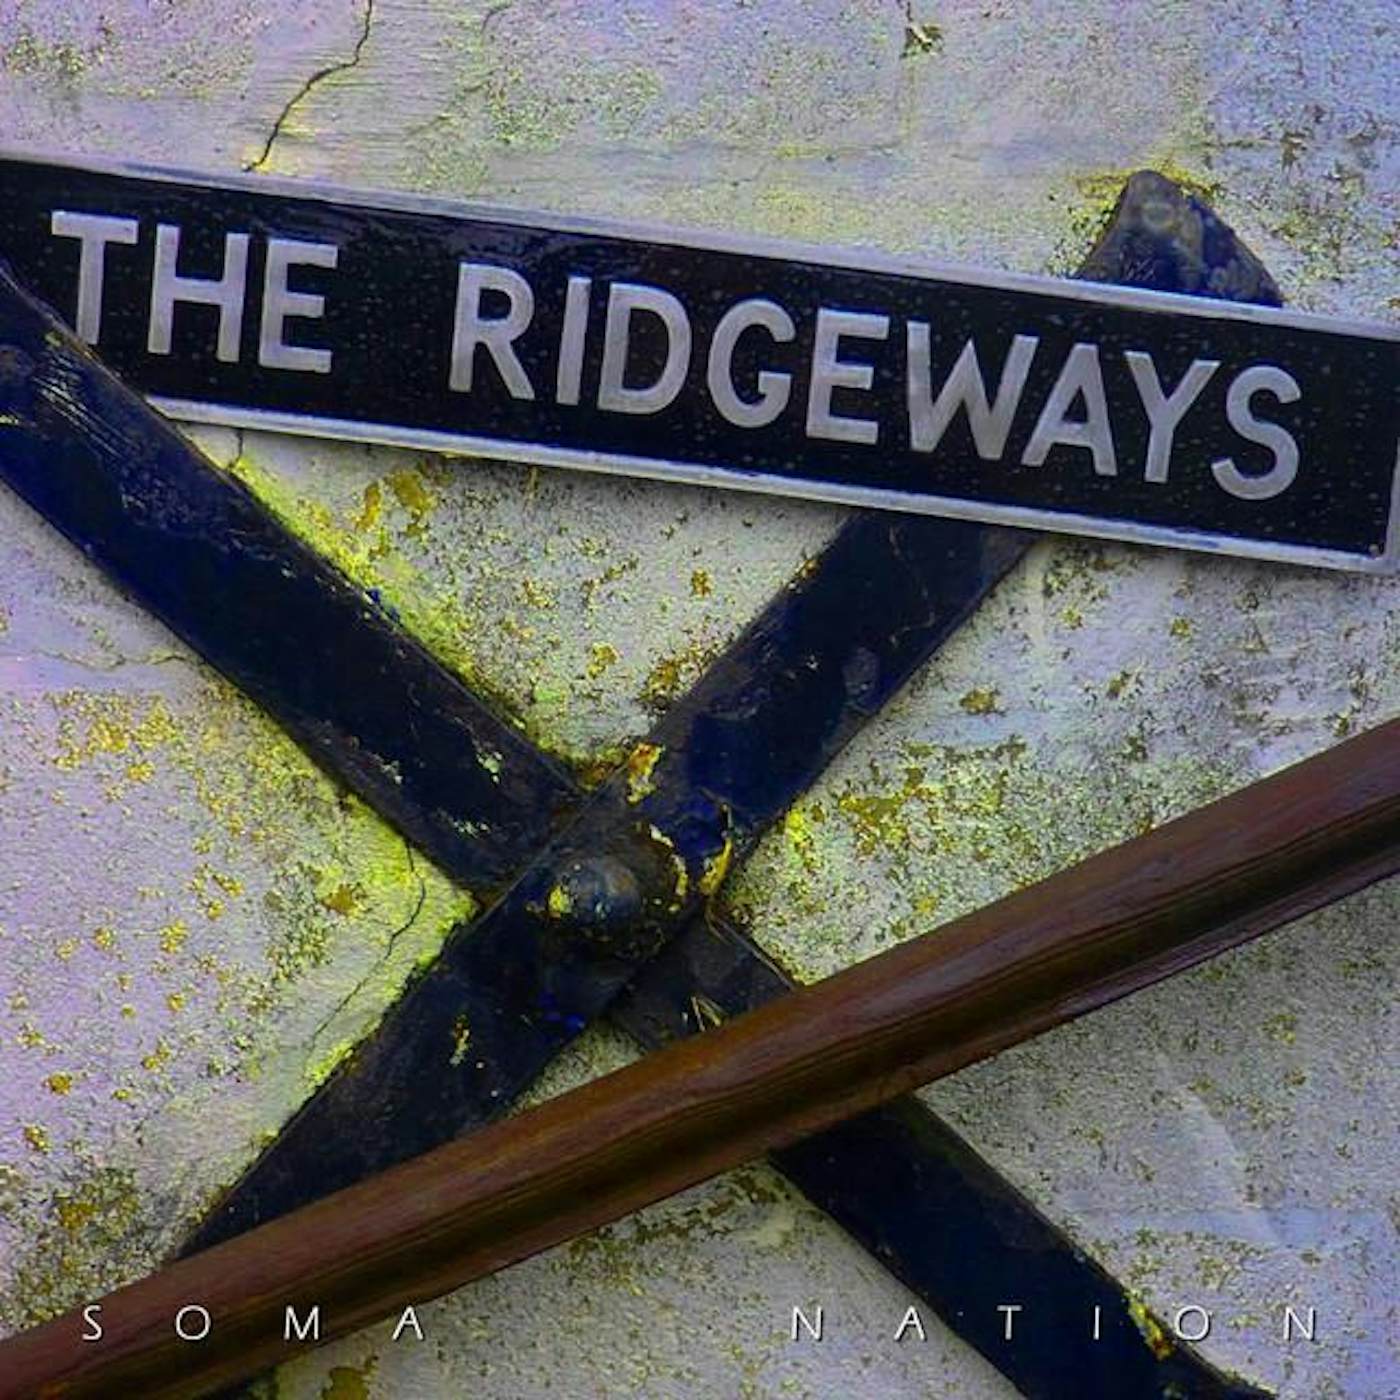 The Ridgeways